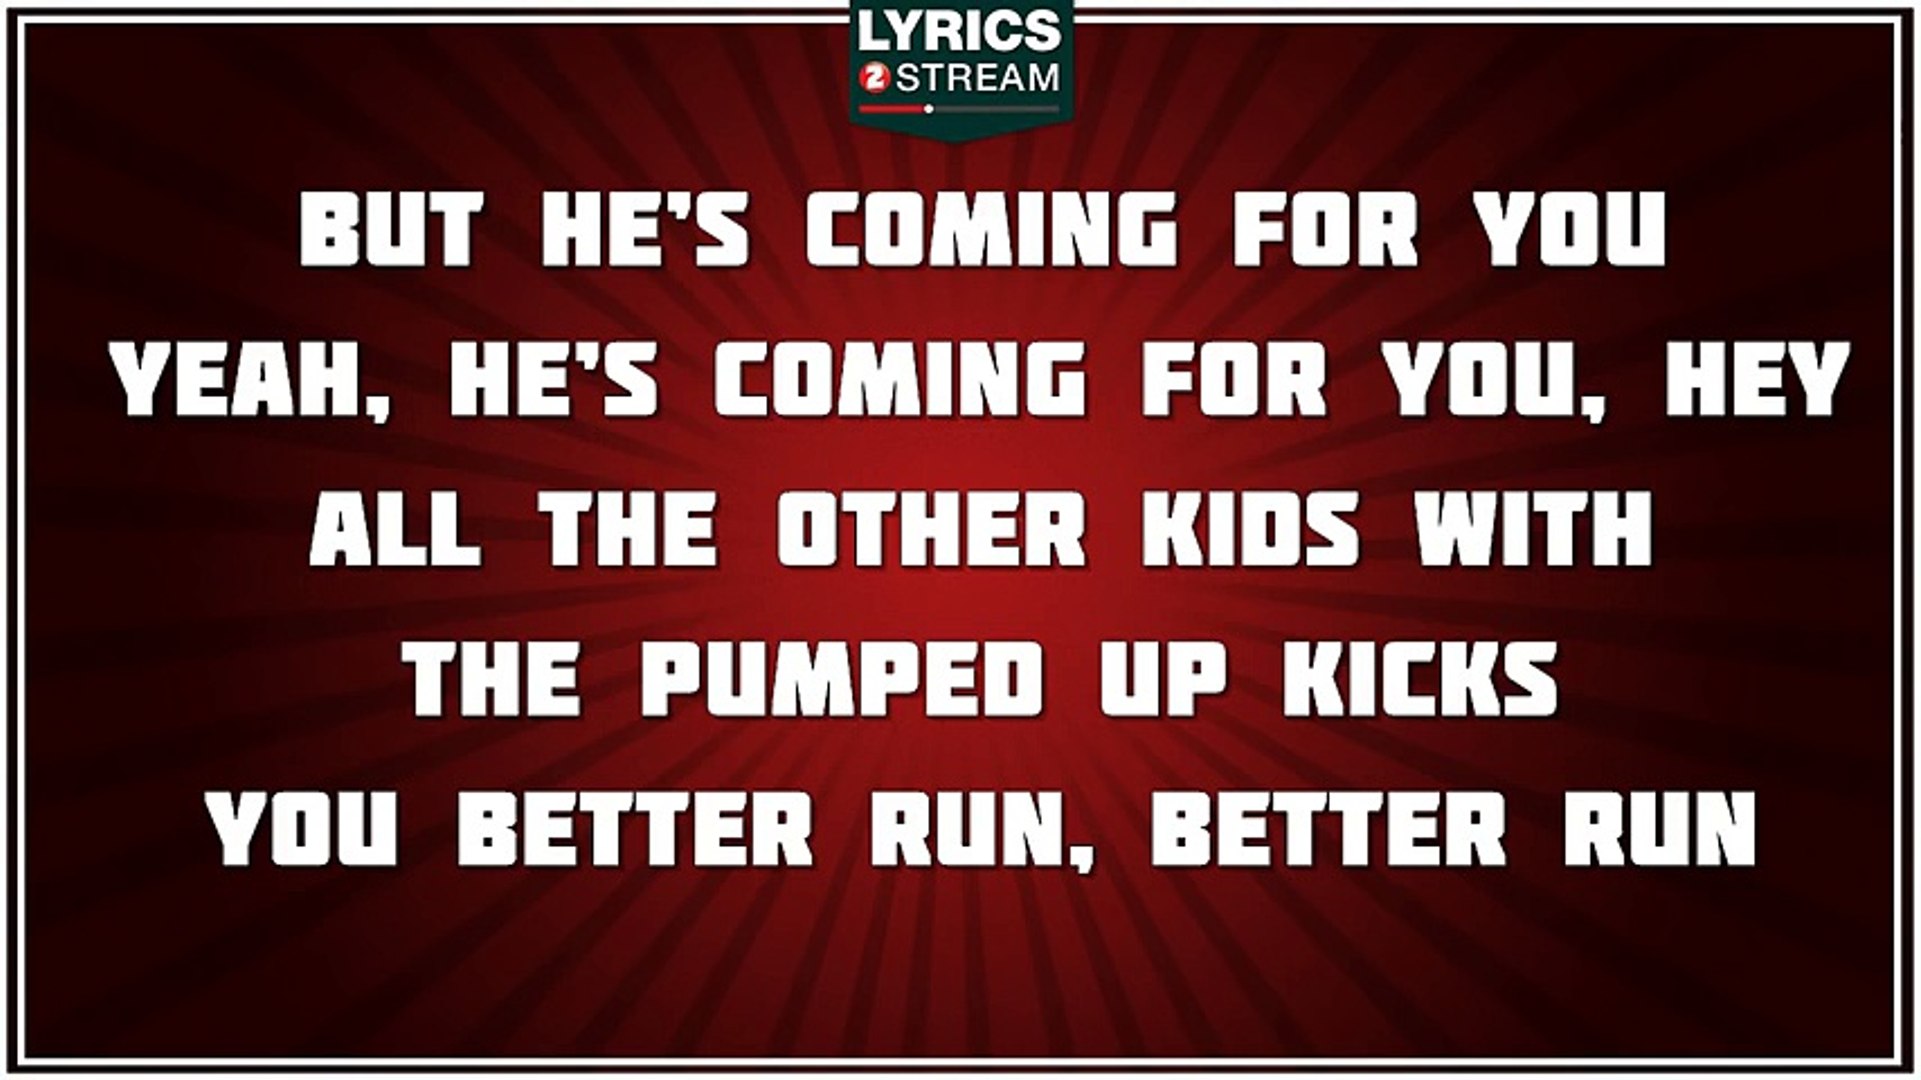 Foster The People - Pumped Up Kicks (Lyrics) 